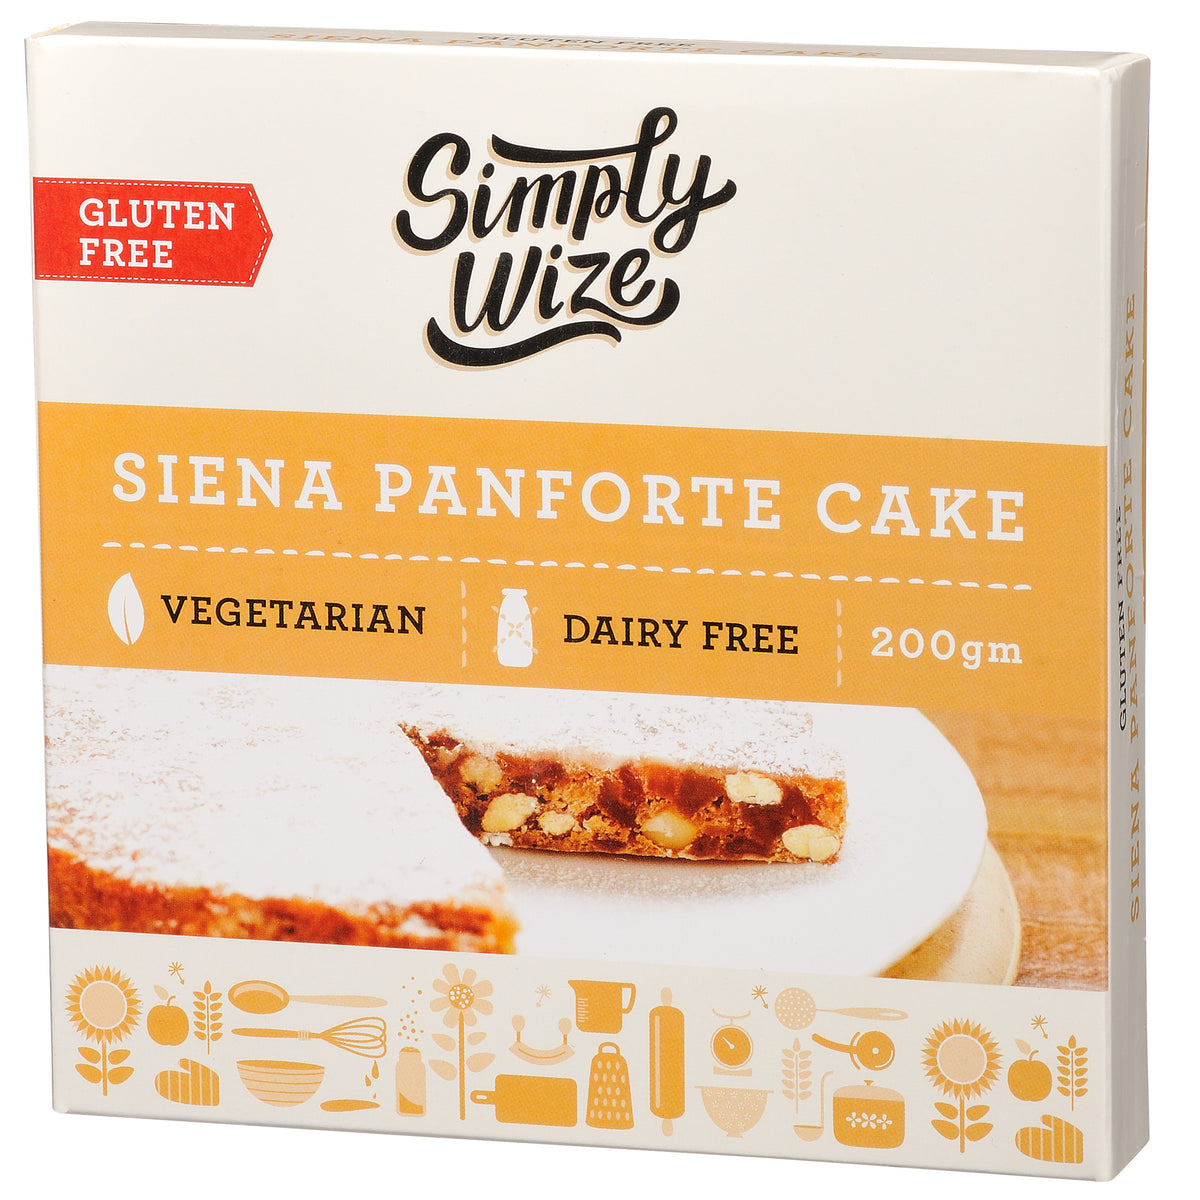 Simply Wize Siena Panaforte Gluten free